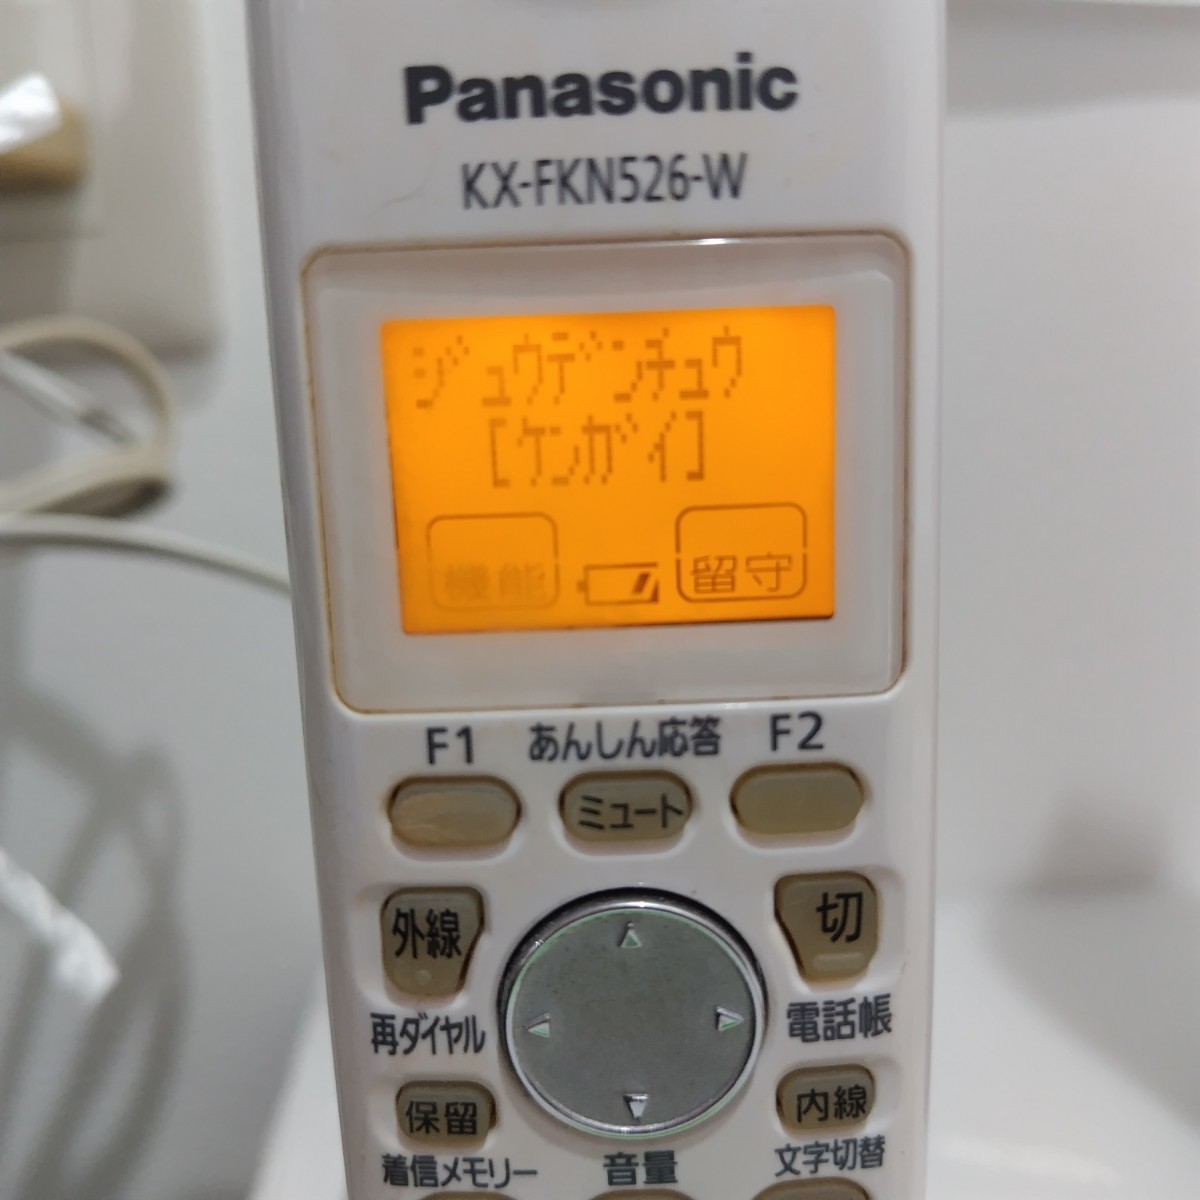 D(0118i3) Panasonic パナソニック 電話機 VE-GP24-W 親機 /KX-FKN526-W 子機 充電器つき 通電確認済み ★アダプターなし_画像3